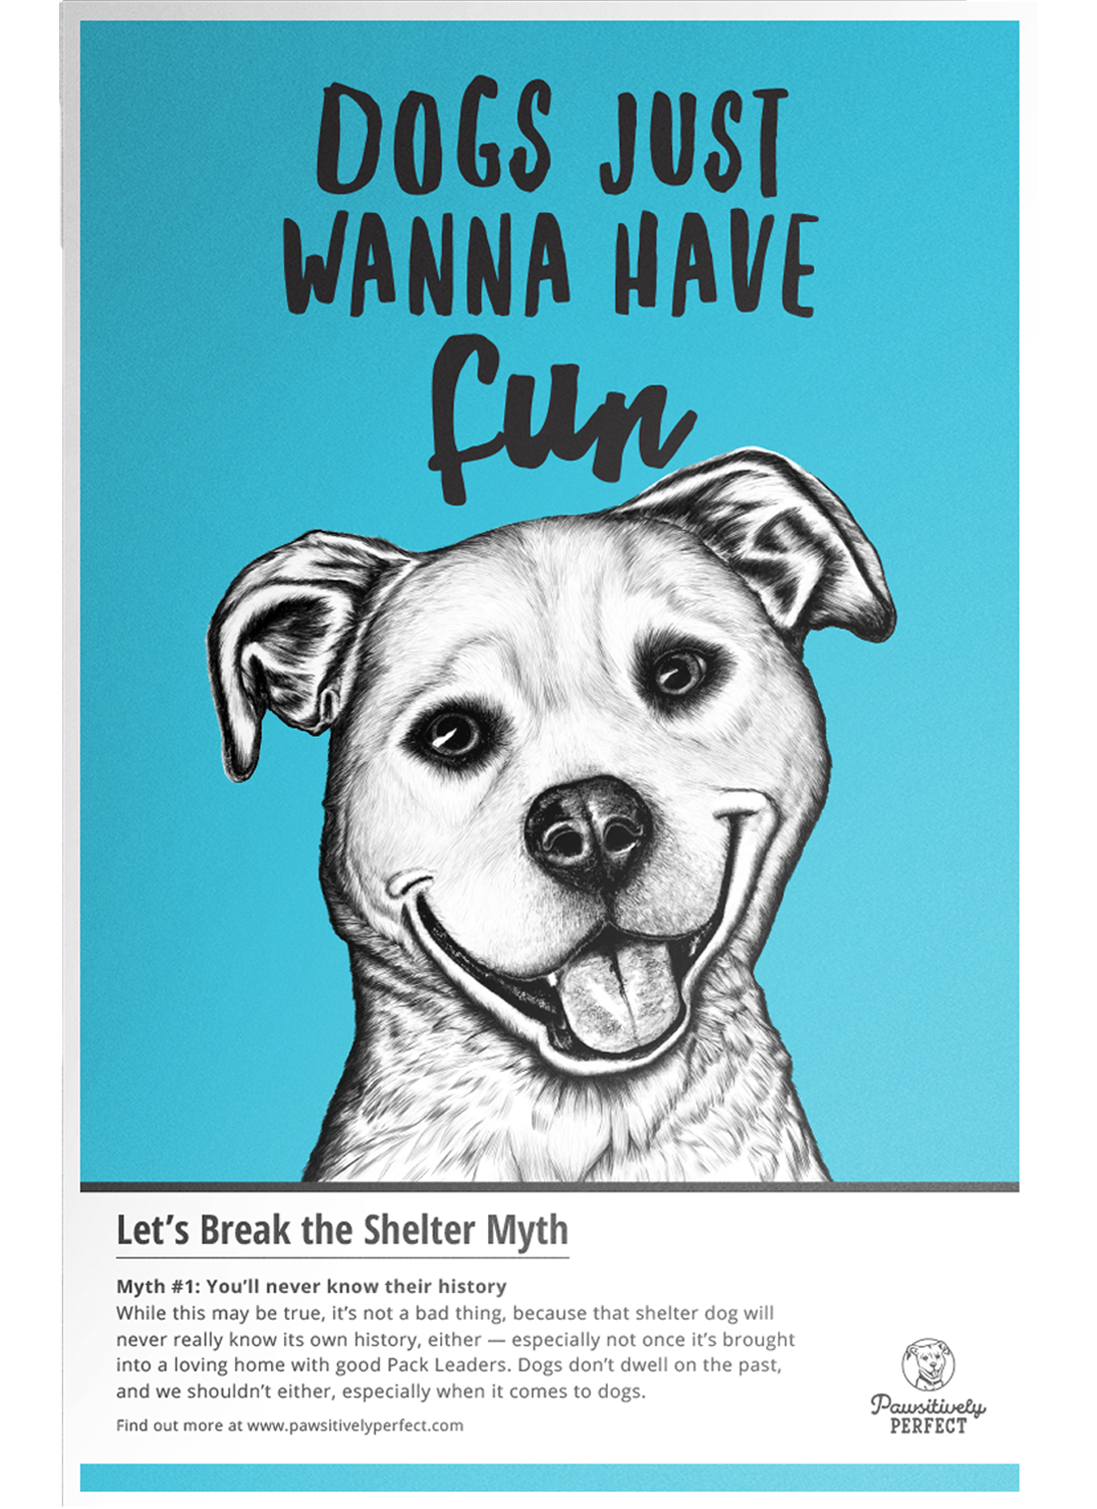 senior thesis dog adoption rescue shelter Website book Handbook ad campaign Guidebook portrait Pet Portrait dog portrait milwaukee institute